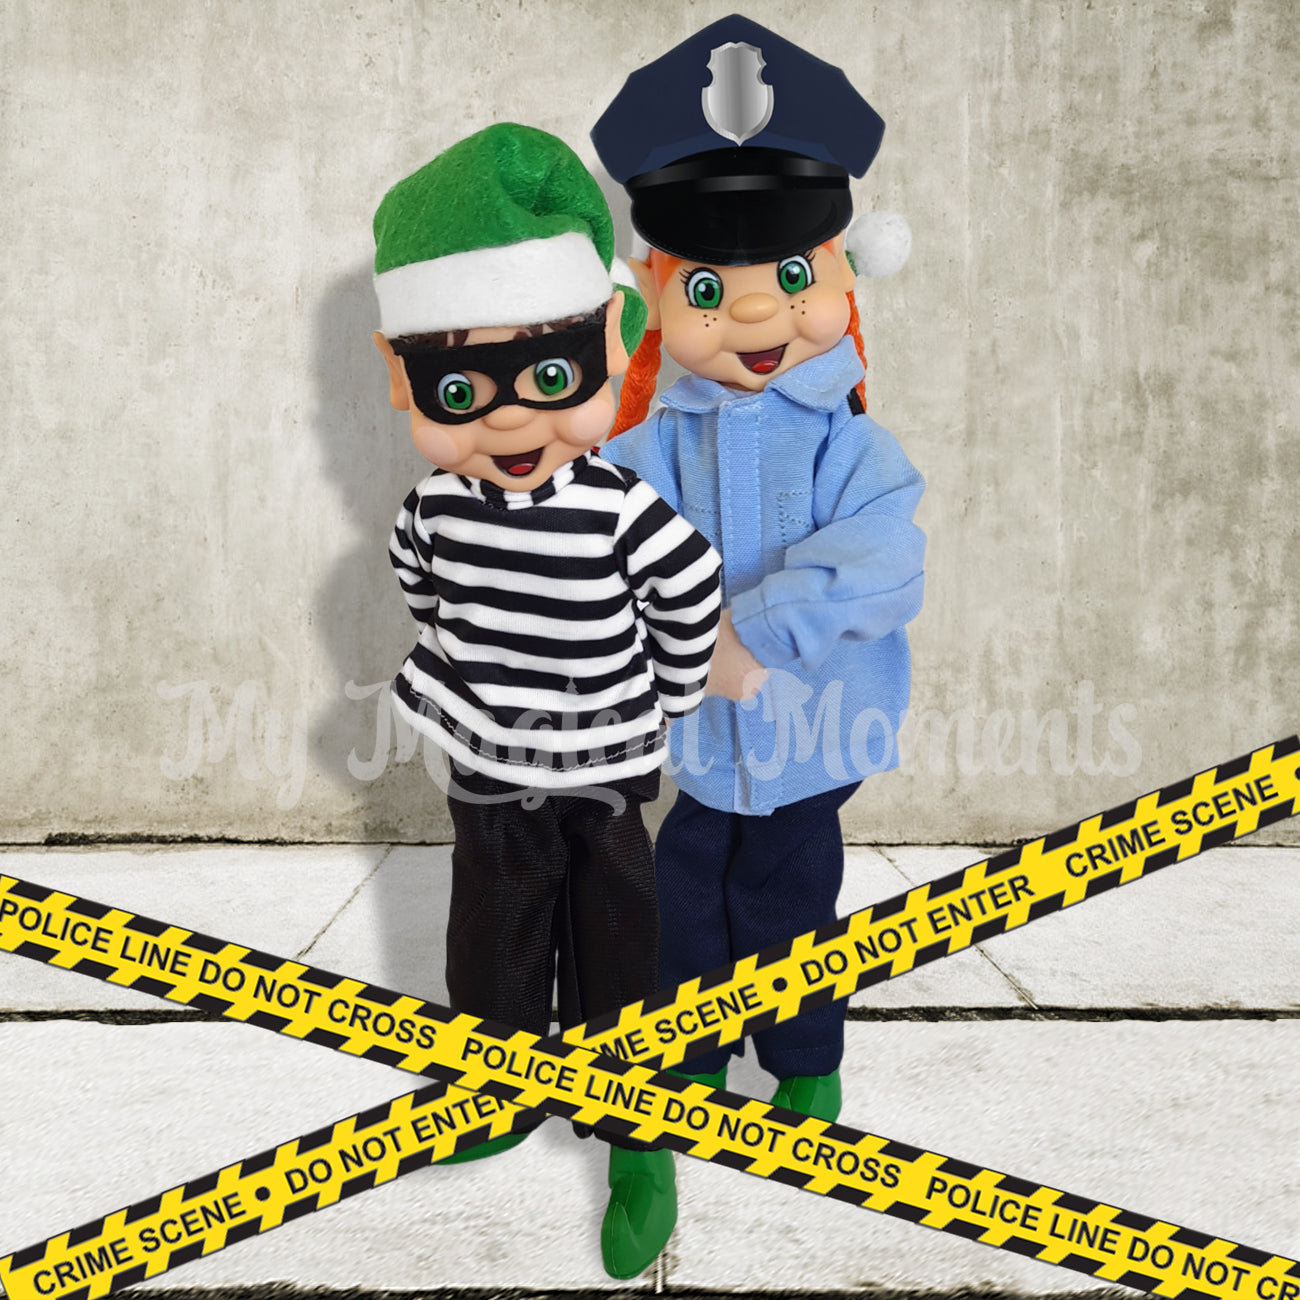 Burglar being arrested by an elf police